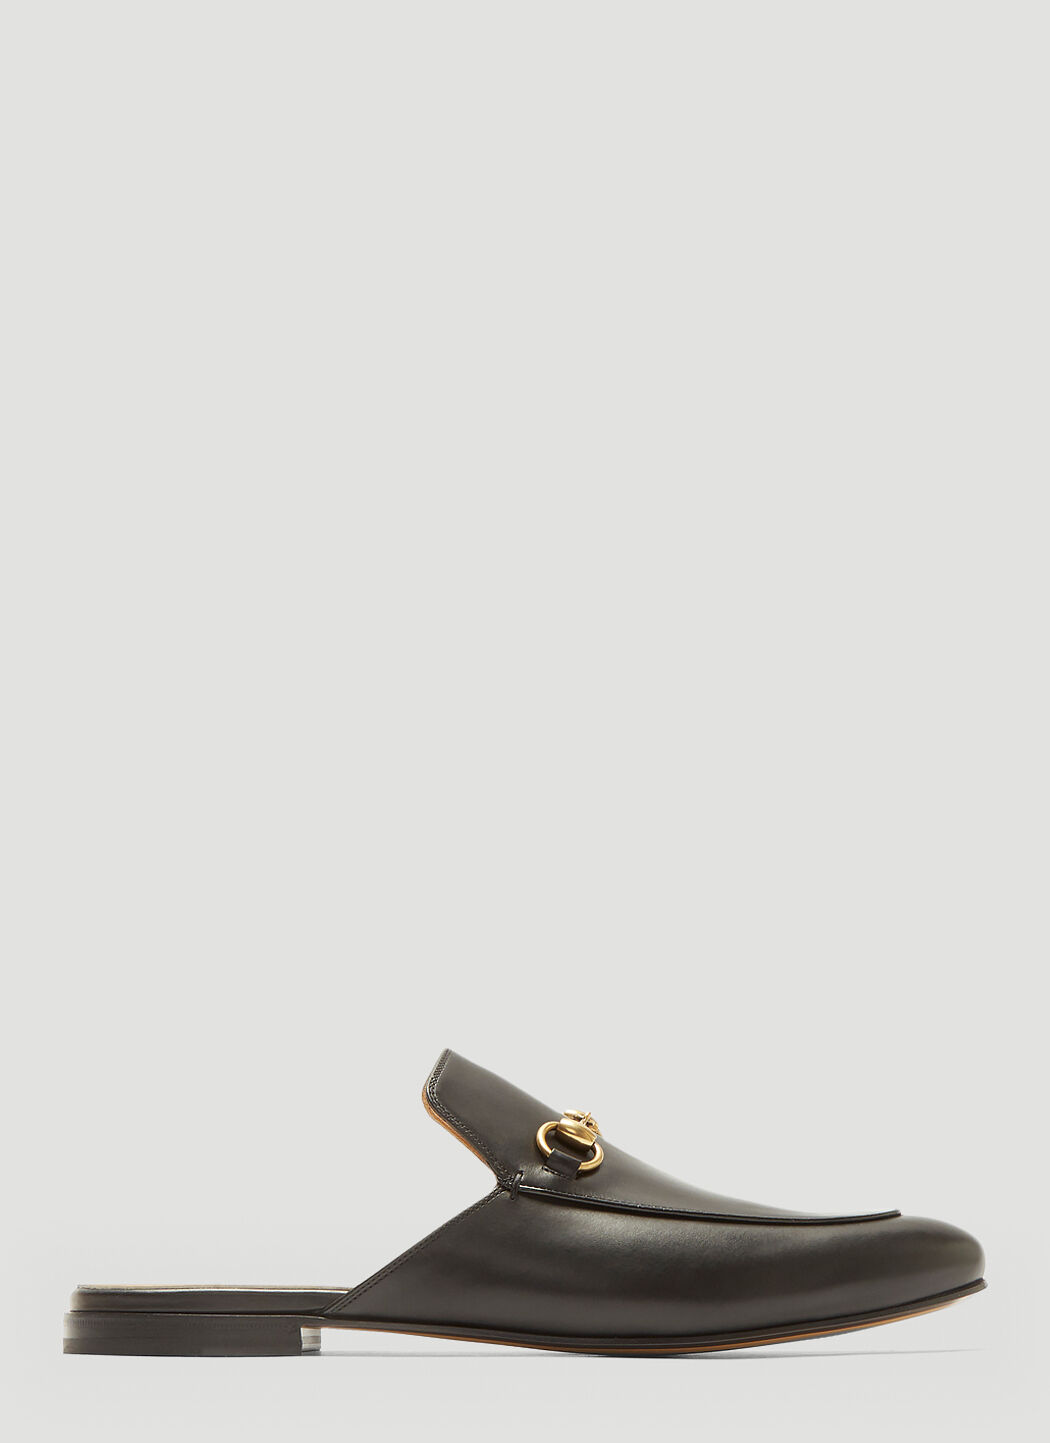 Saint Laurent Horsebit Leather Slipper Shoes 黑色 sla0231015